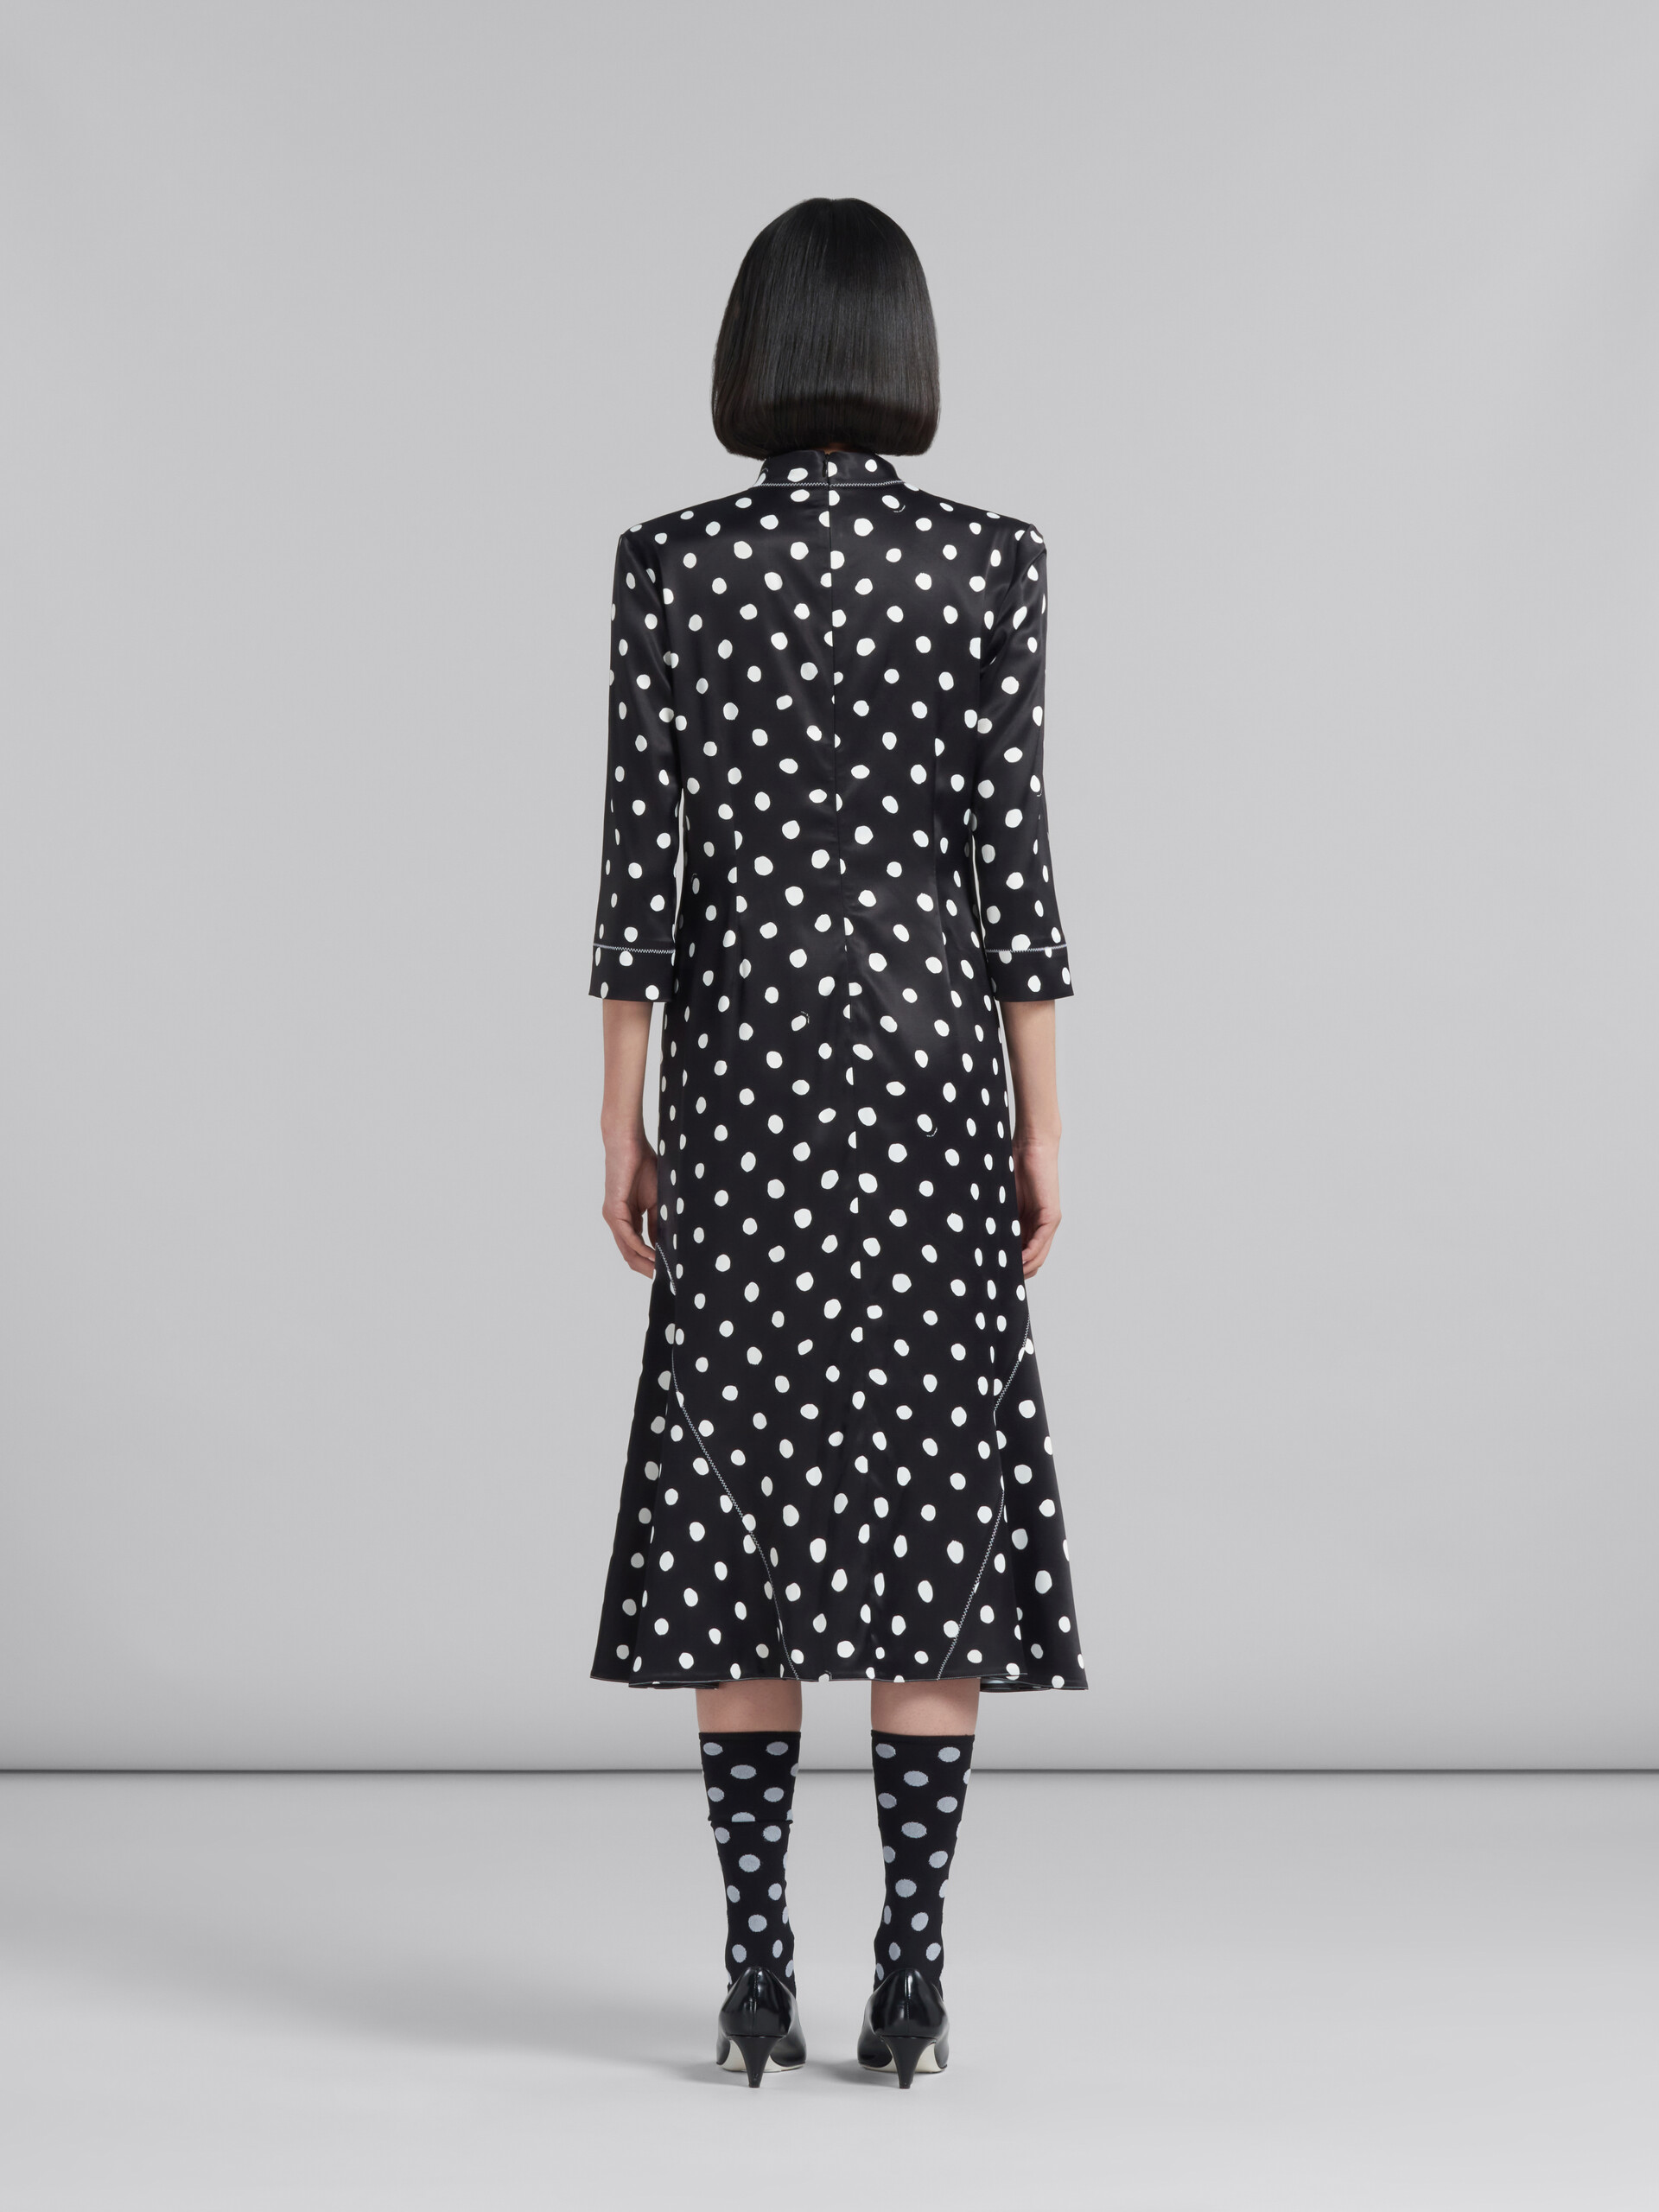 Black satin dress with polka dots - Dresses - Image 3